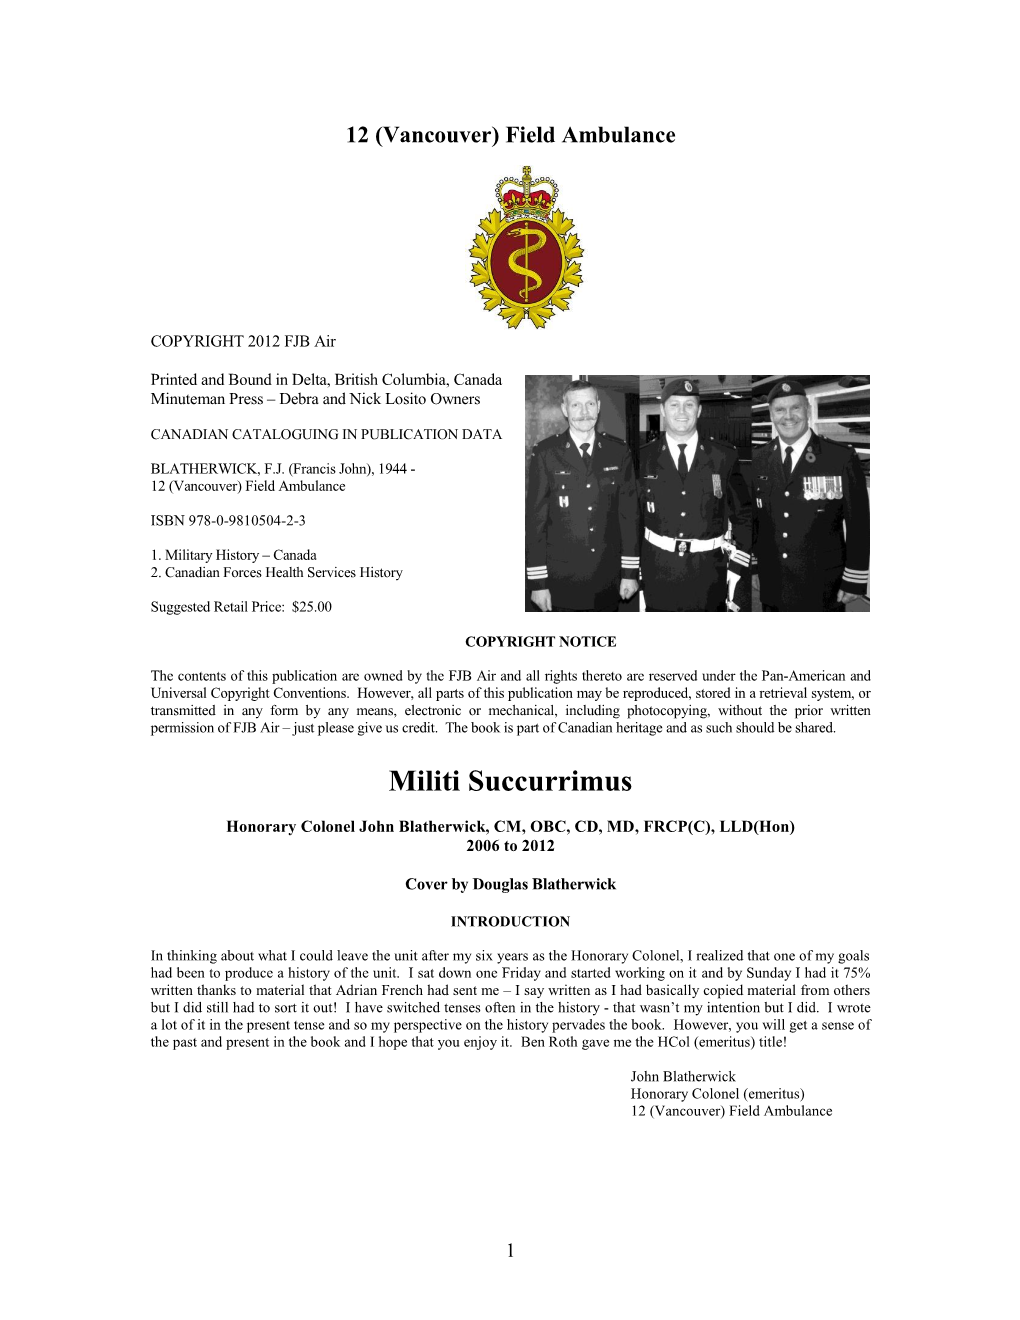 12 Vancouver Field Ambulance History.Pdf